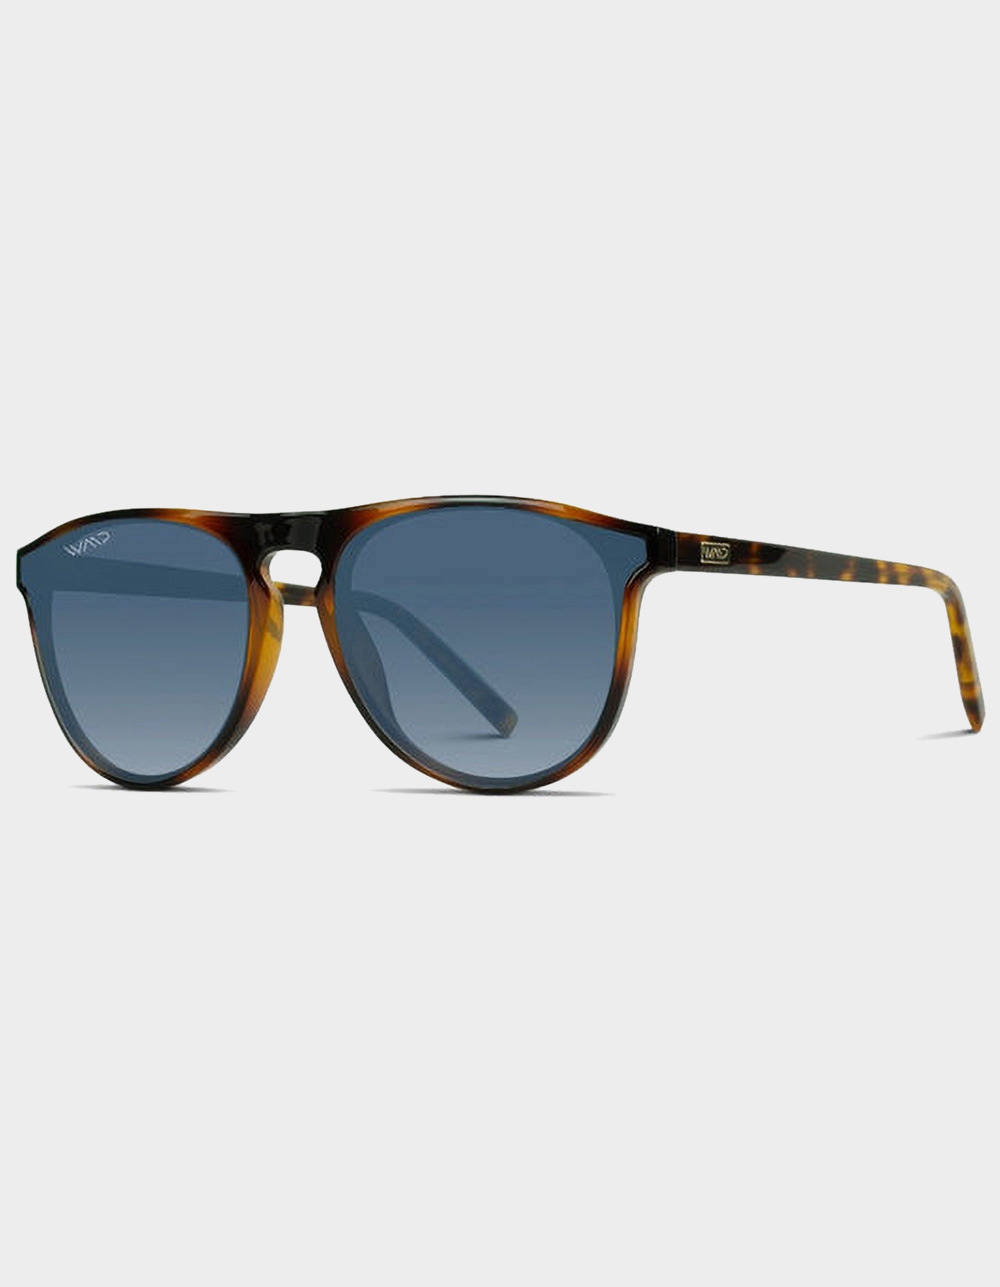 WMP EYEWEAR Prescott Polarized Sunglasses